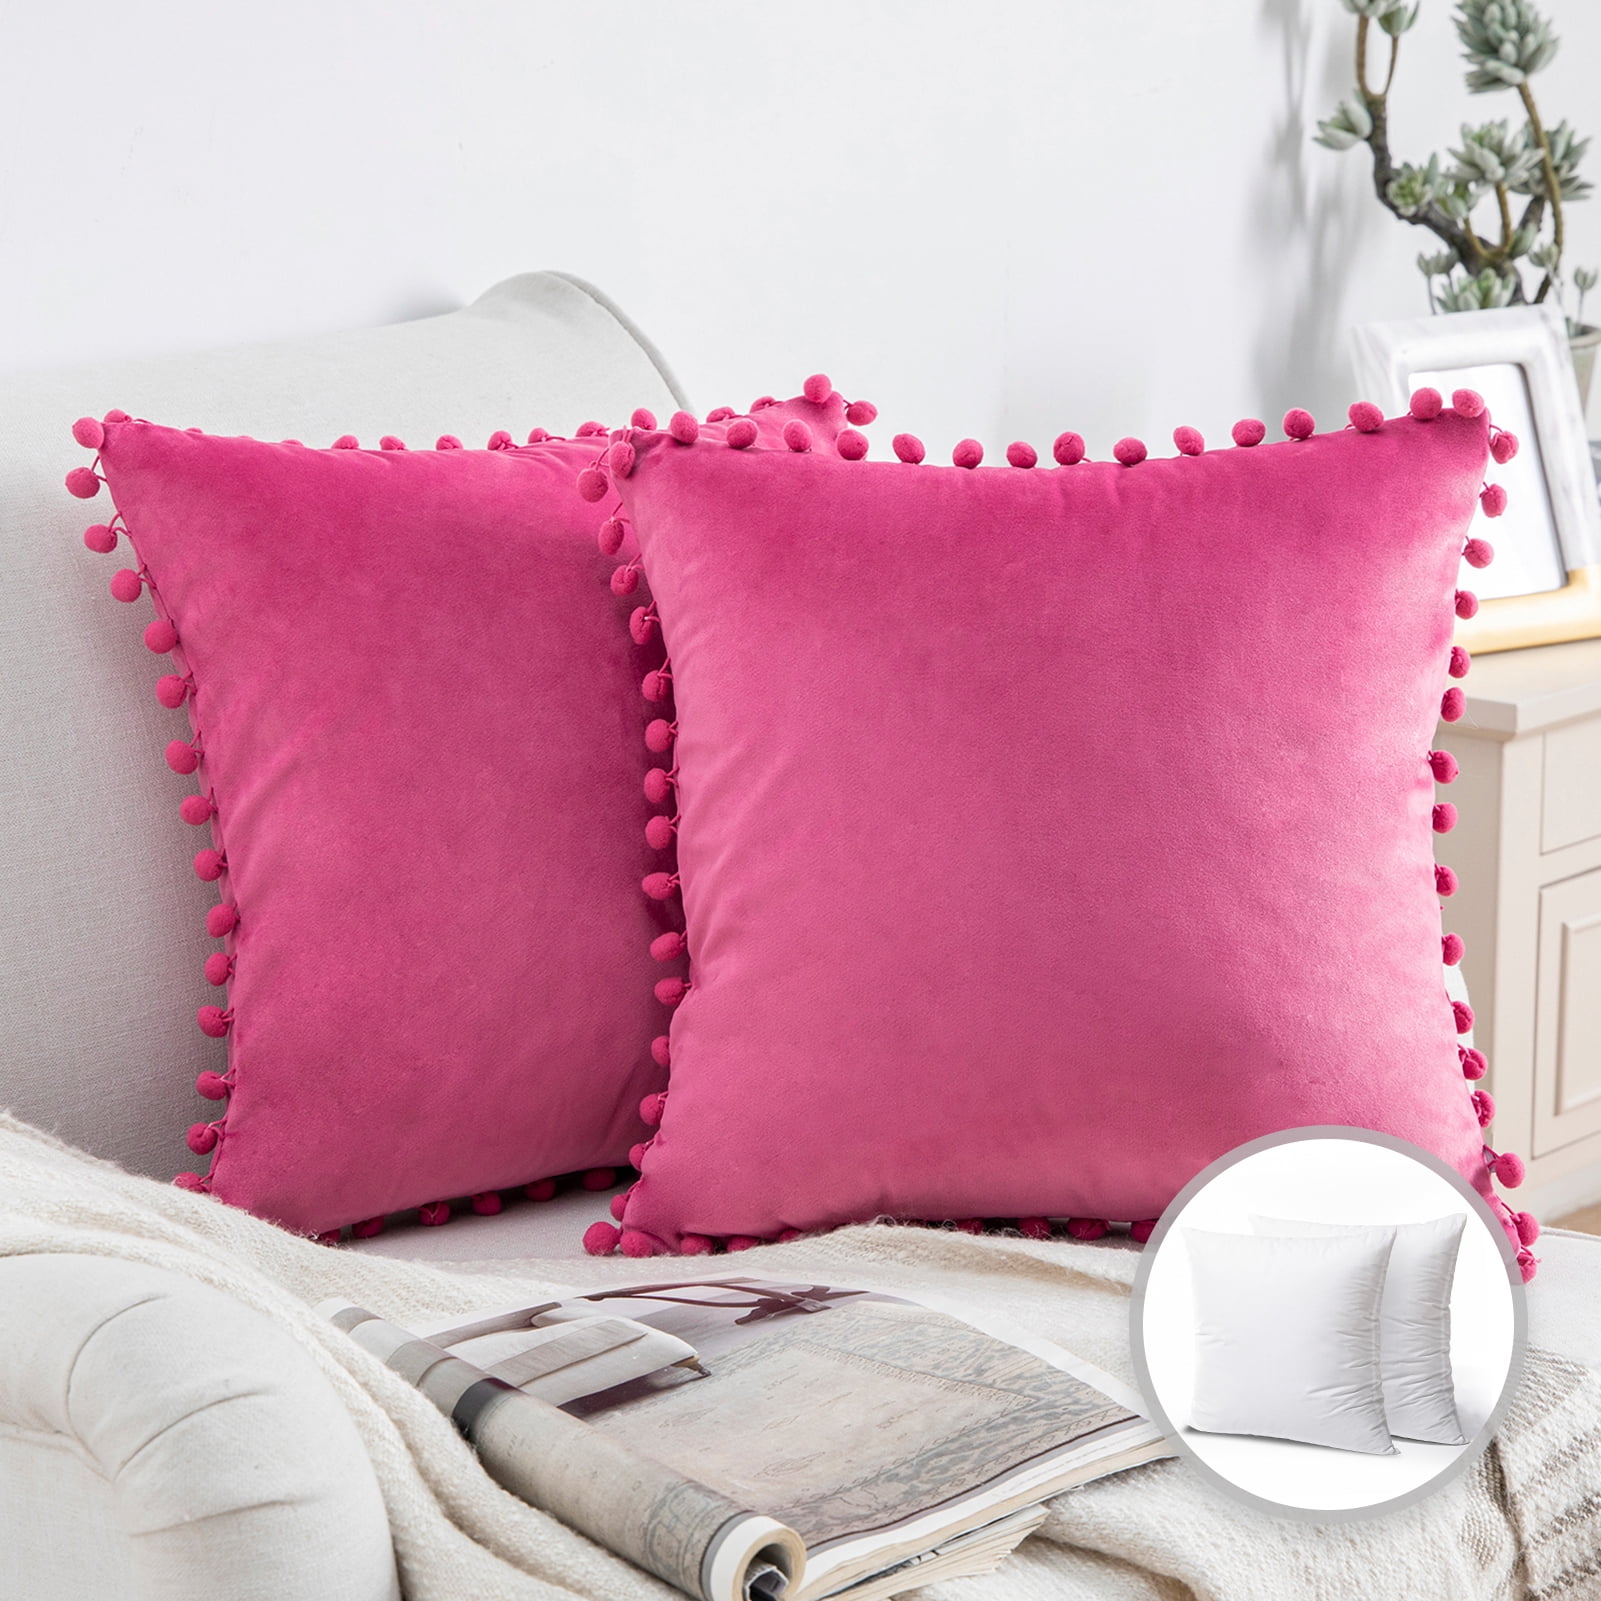 Phantoscope Pom Pom Velvet Series Decorative Throw Pillow, 18 inch x 18 inch, Pink, 2 Pack